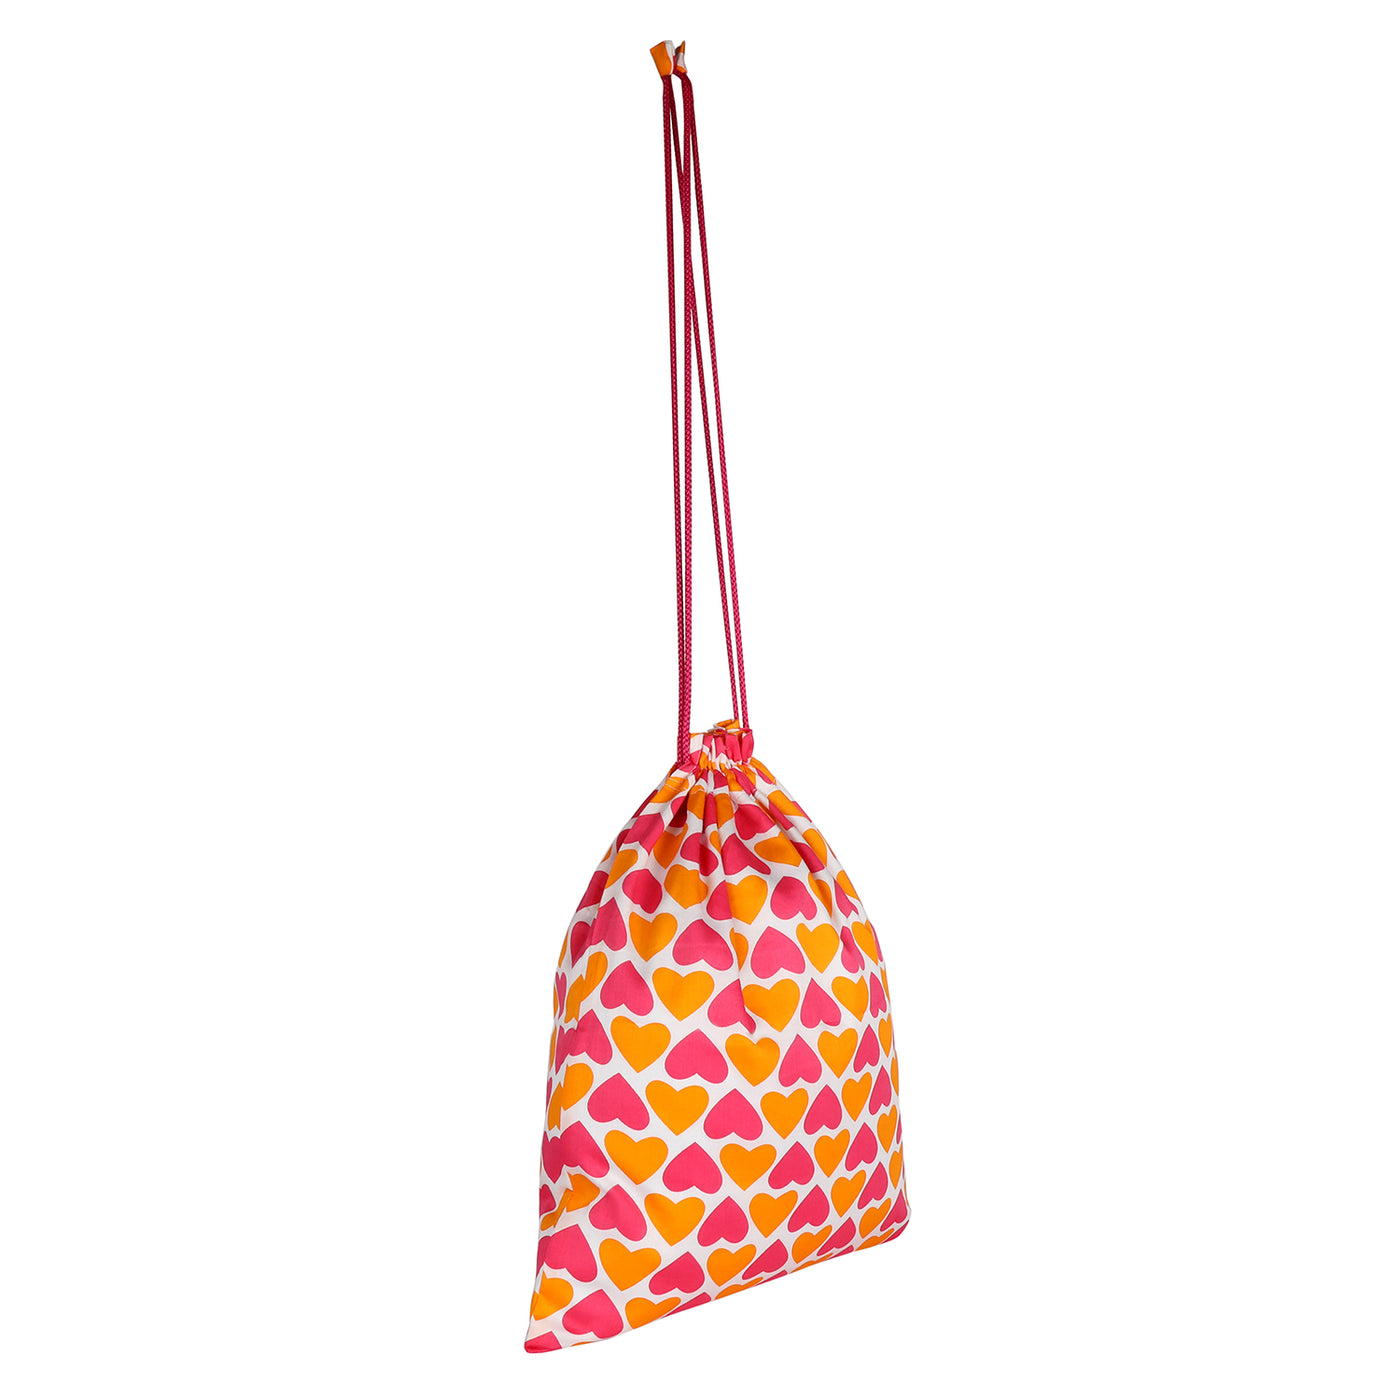 Pink and Orange Hearts Drawstring Bag